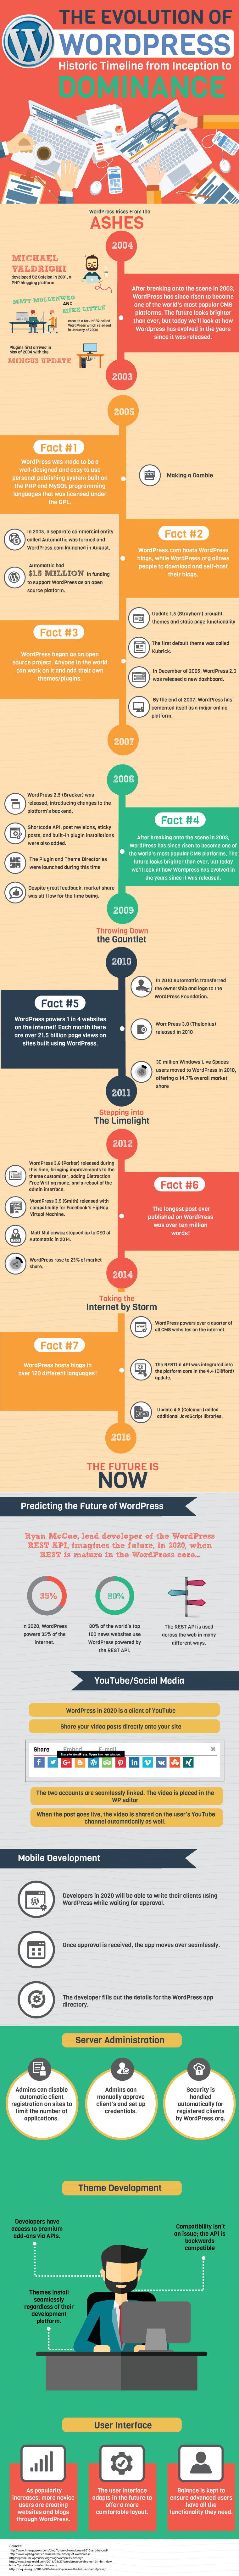 WordPress-Timeline-infographic